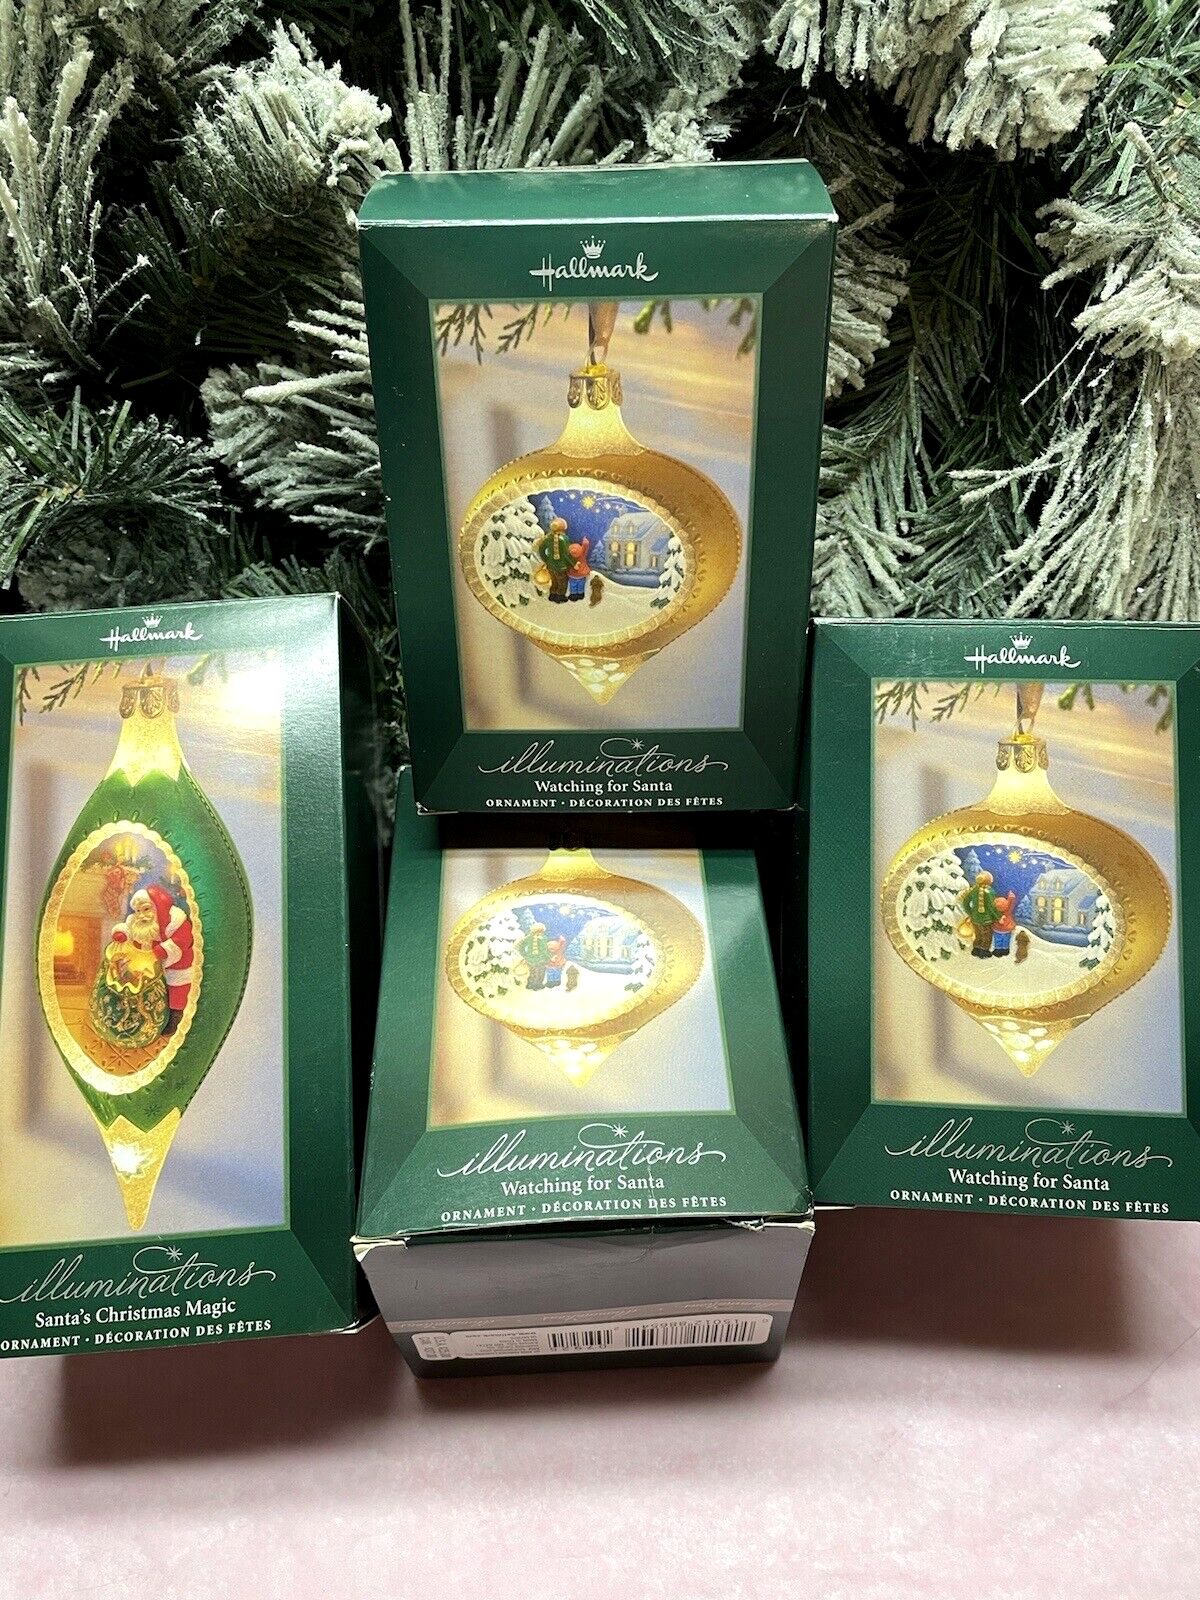 2005 Hallmark Illuminations  4 Bx Ornaments Watching for Santa & Santa's Magic